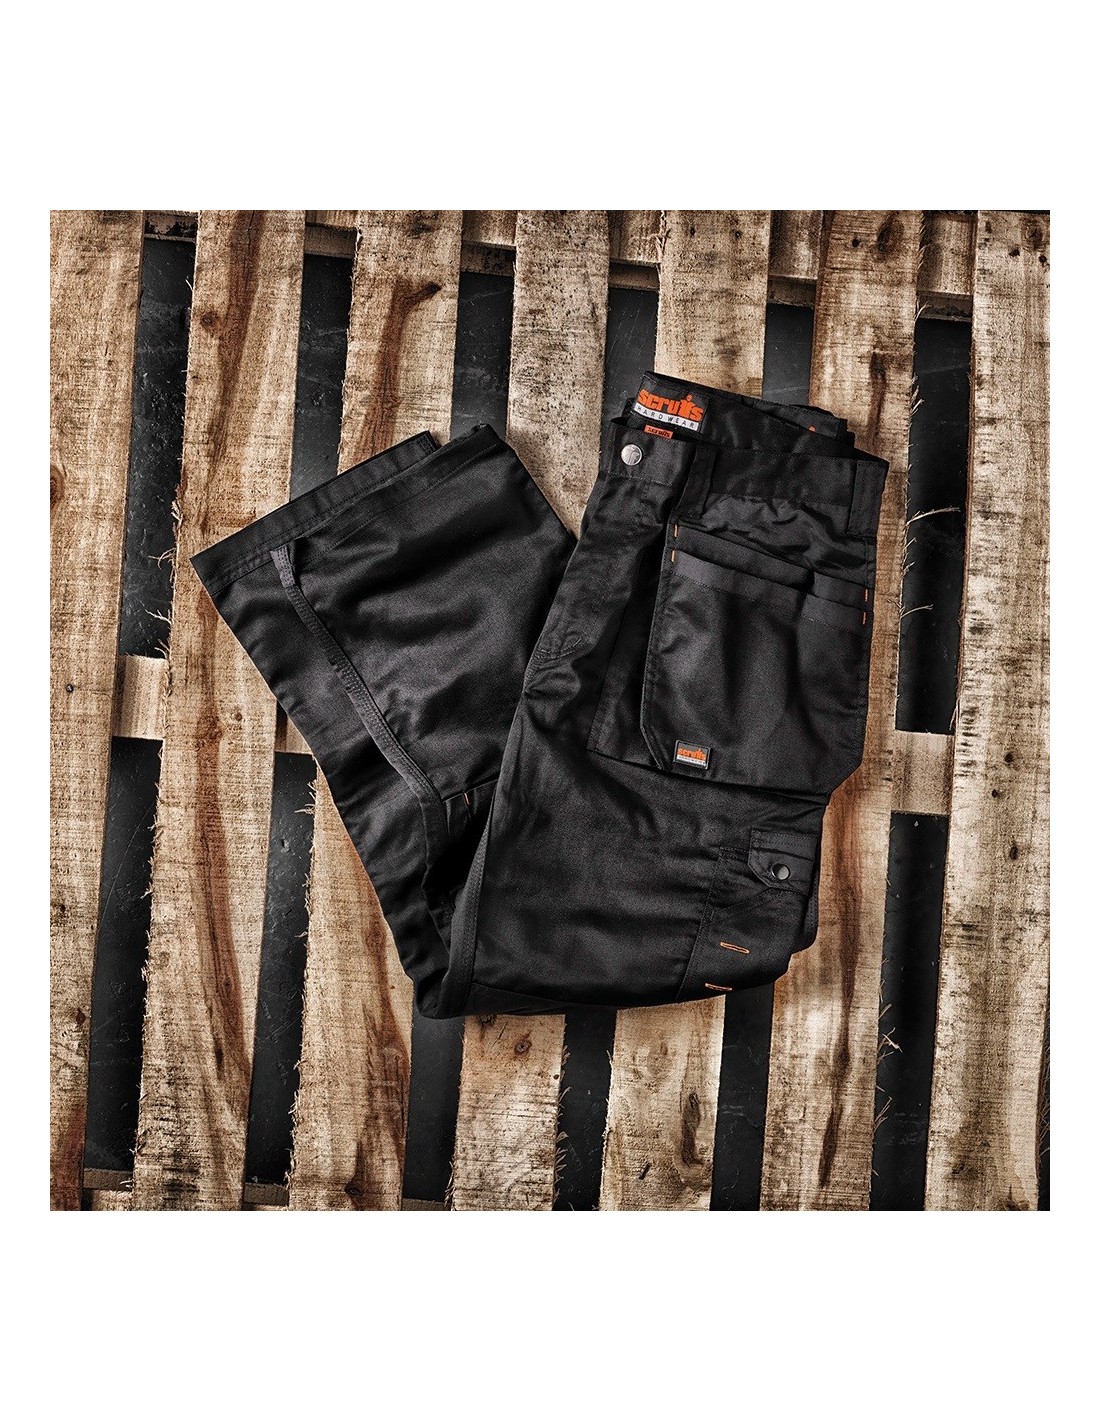 SCRUFFS WORKER PLUS Work Trousers Graphite Grey Navy Black Trade  Hardwearing 3727  PicClick UK